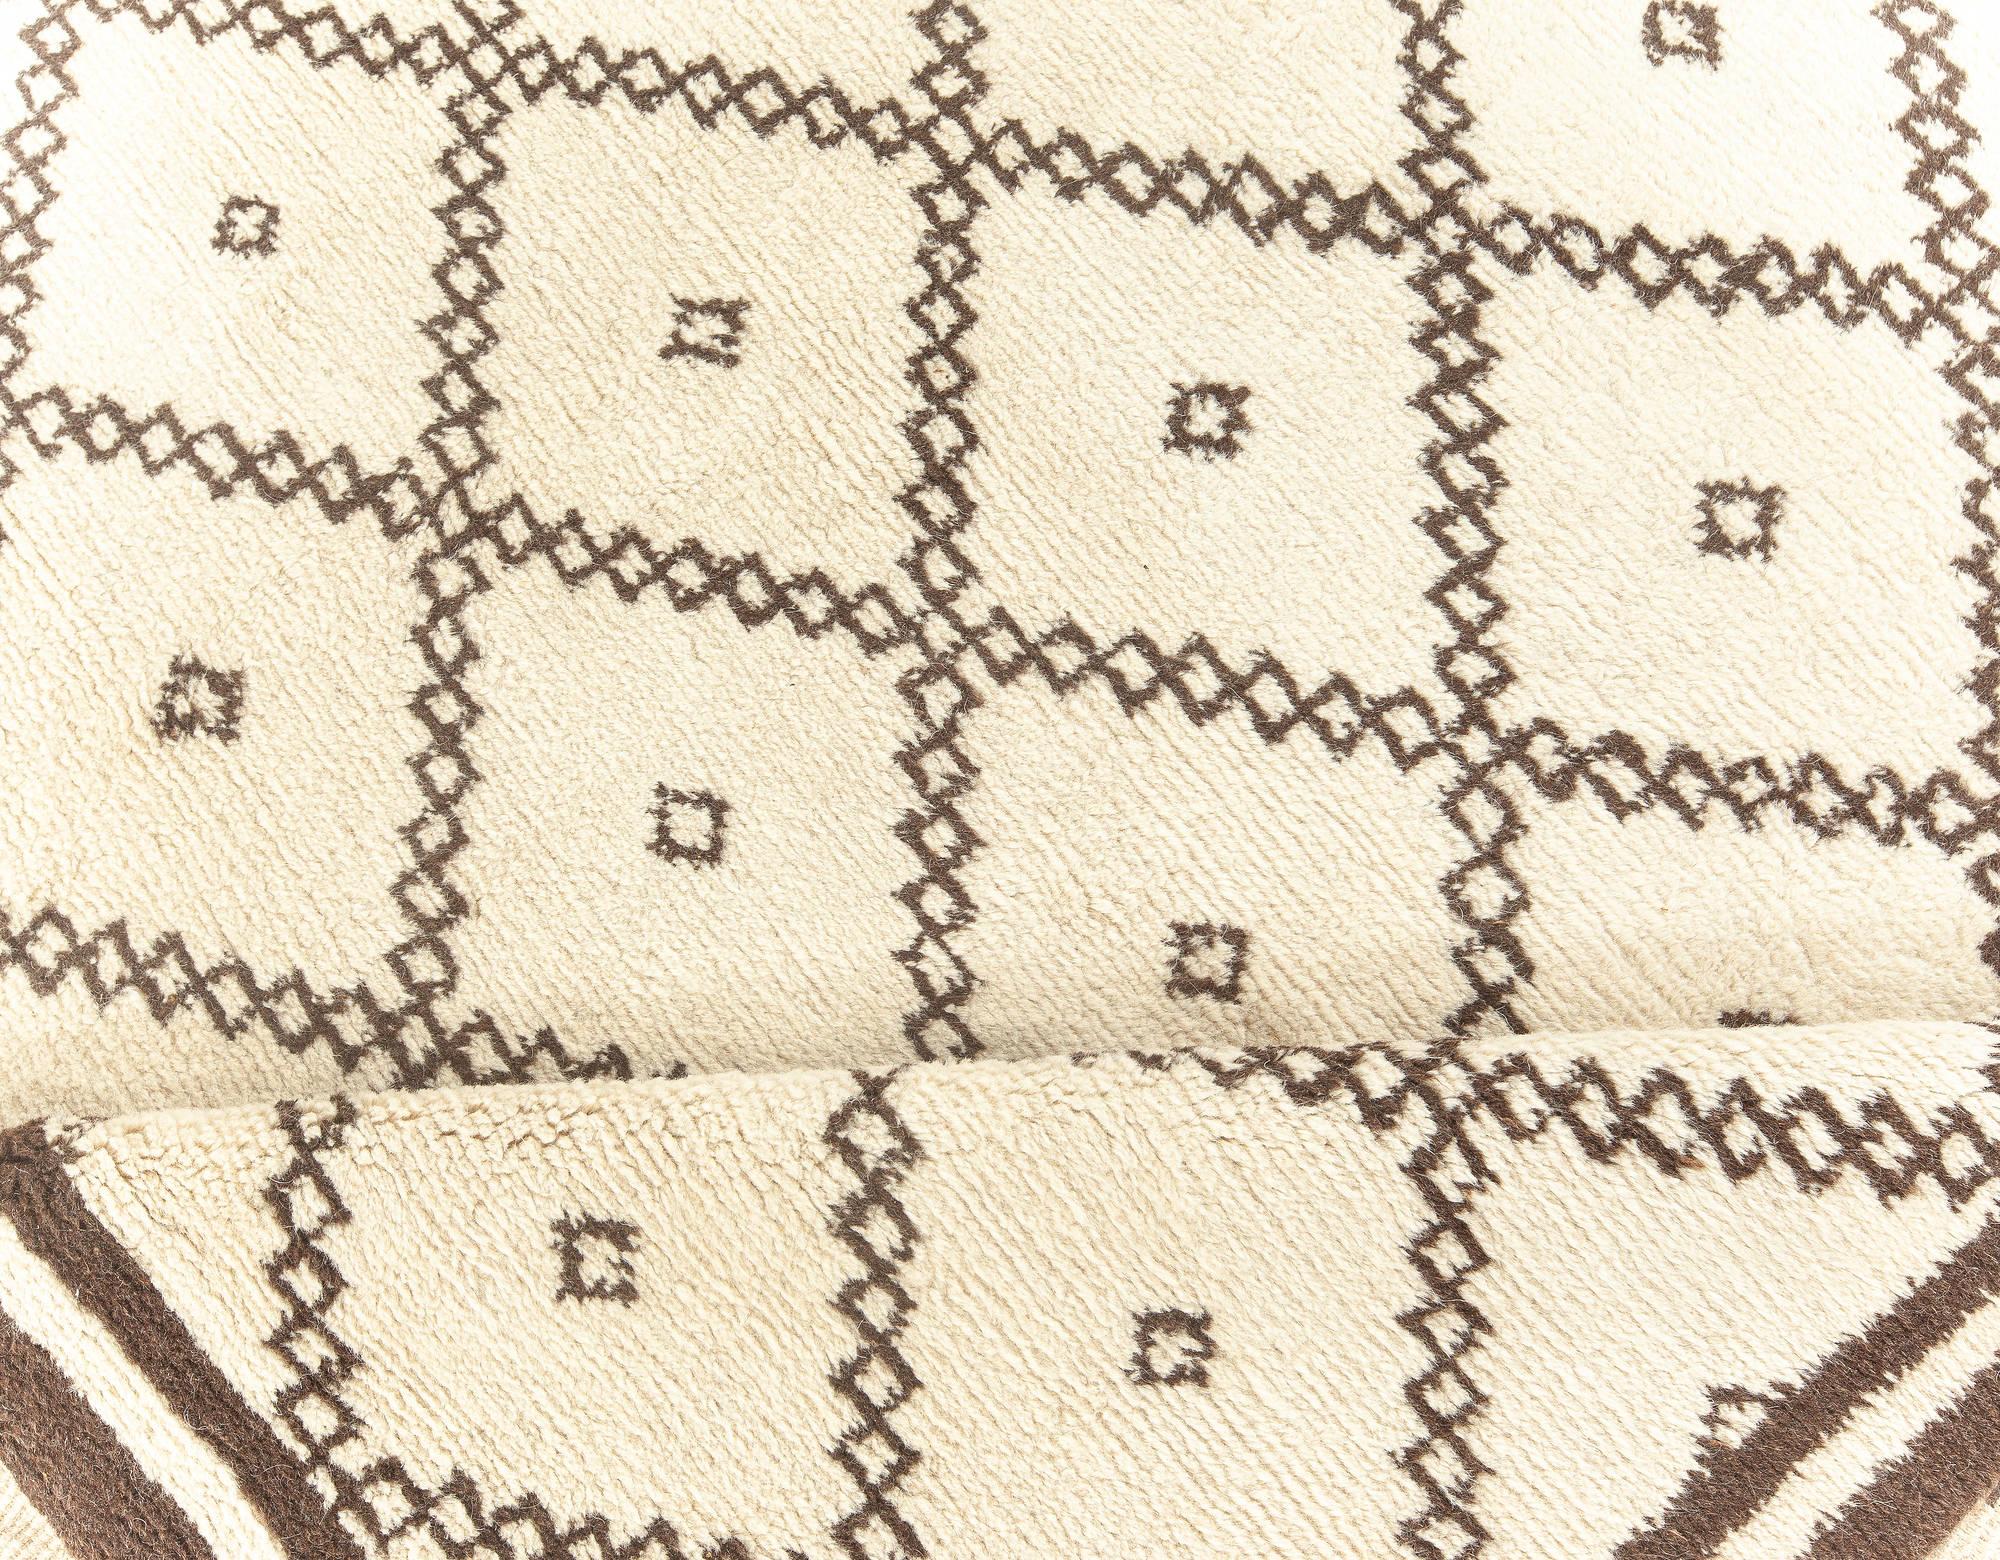 Doris Leslie Blau collection modern Moroccan tribal style beige, brown handmade rug.
Size: 7'4